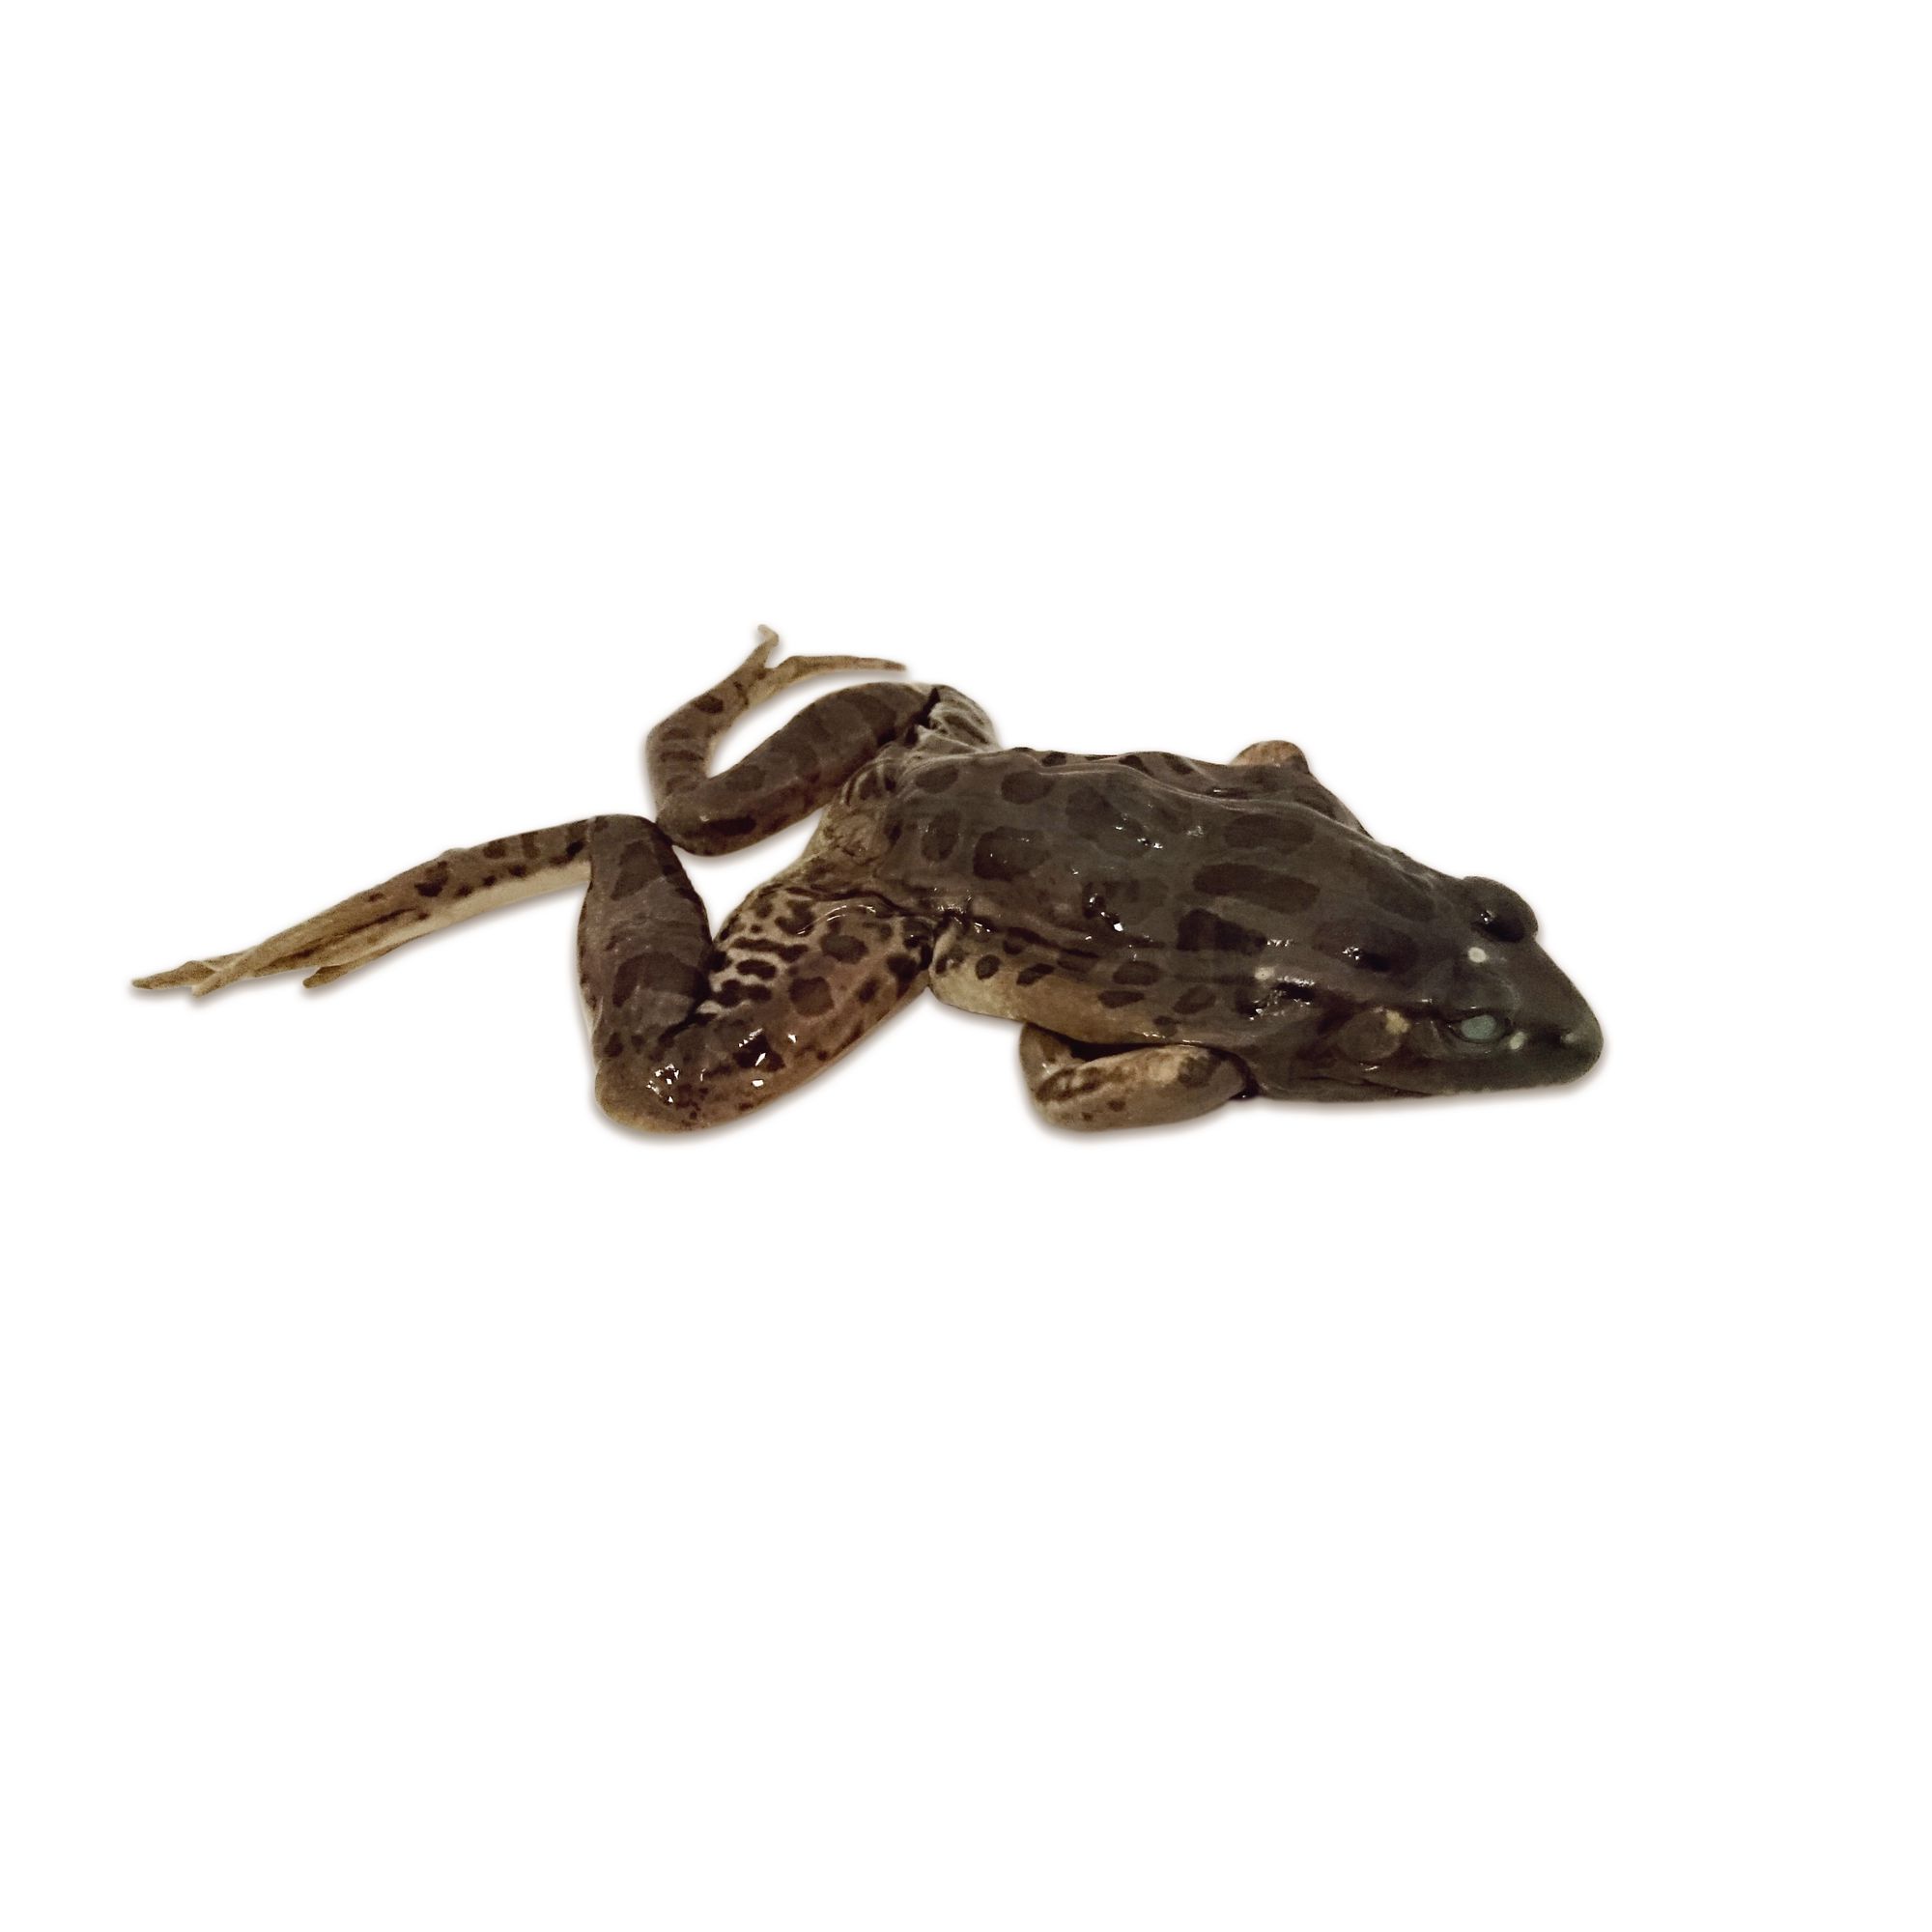 Rana Temporaria (frog) Embalmed